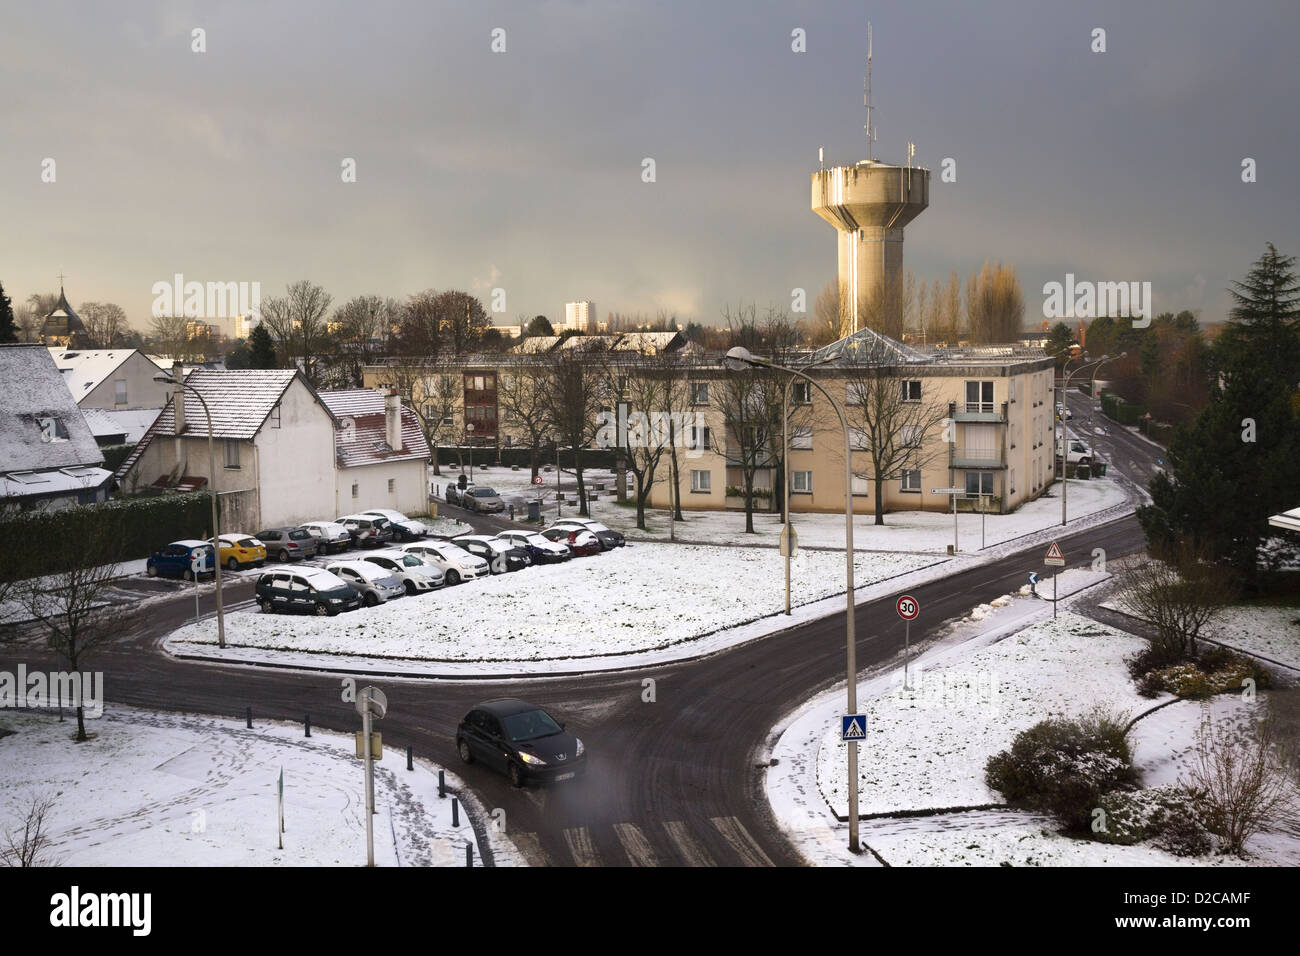 'Le Village' - one of three 'quartiers' of Mont-Saint-Aignan, suburb of Rouen, under blanket of snow Stock Photo